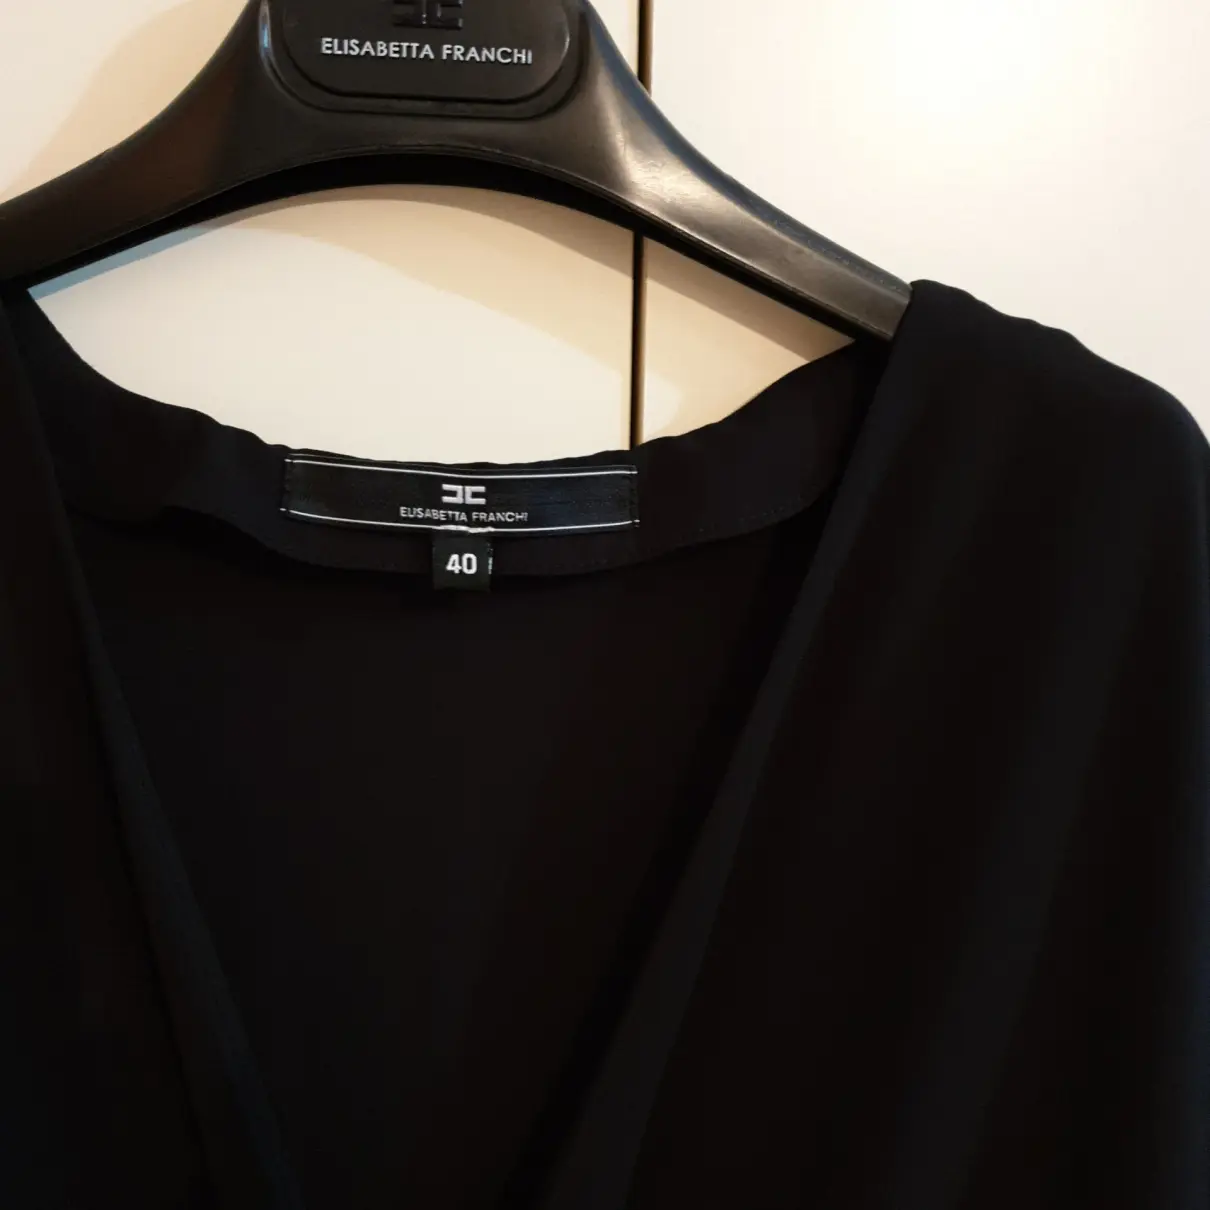 Buy Elisabetta Franchi Shirt online